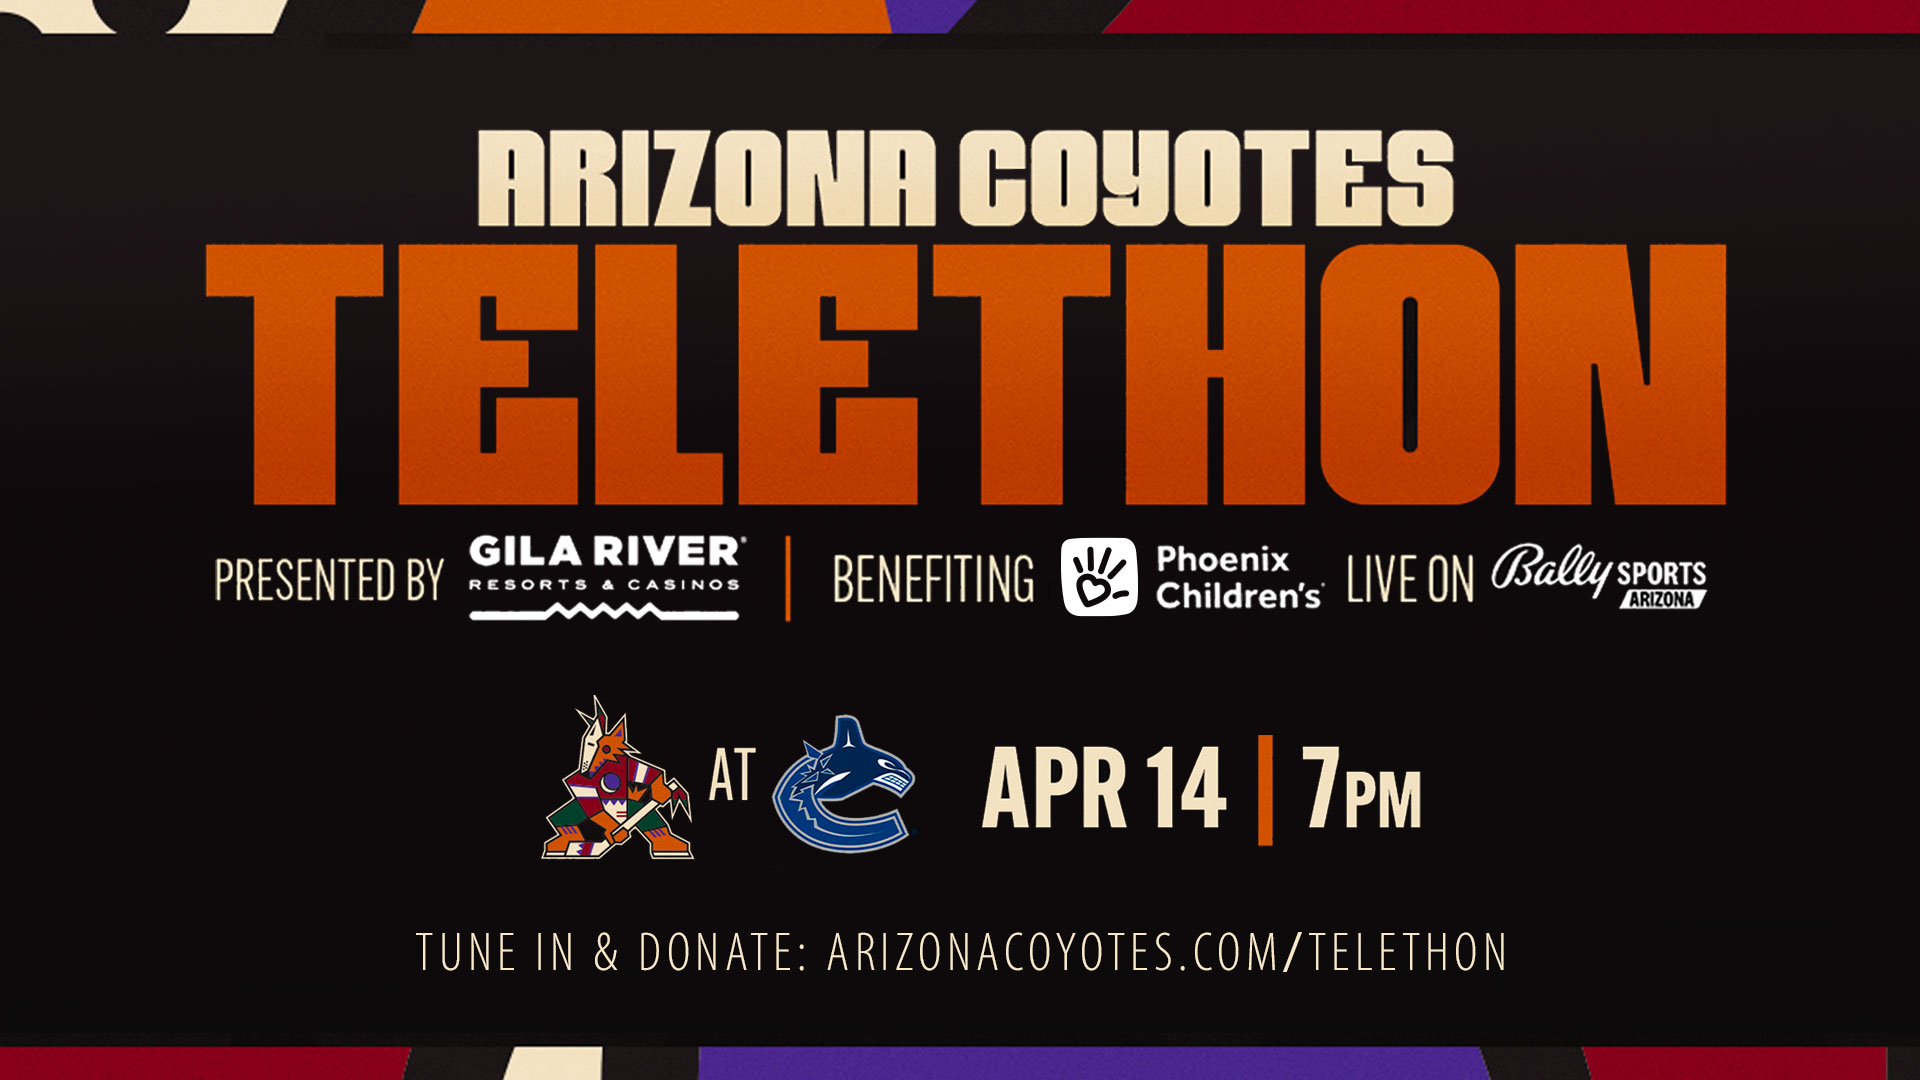 ARizona Coyotes Telethon Banner Image